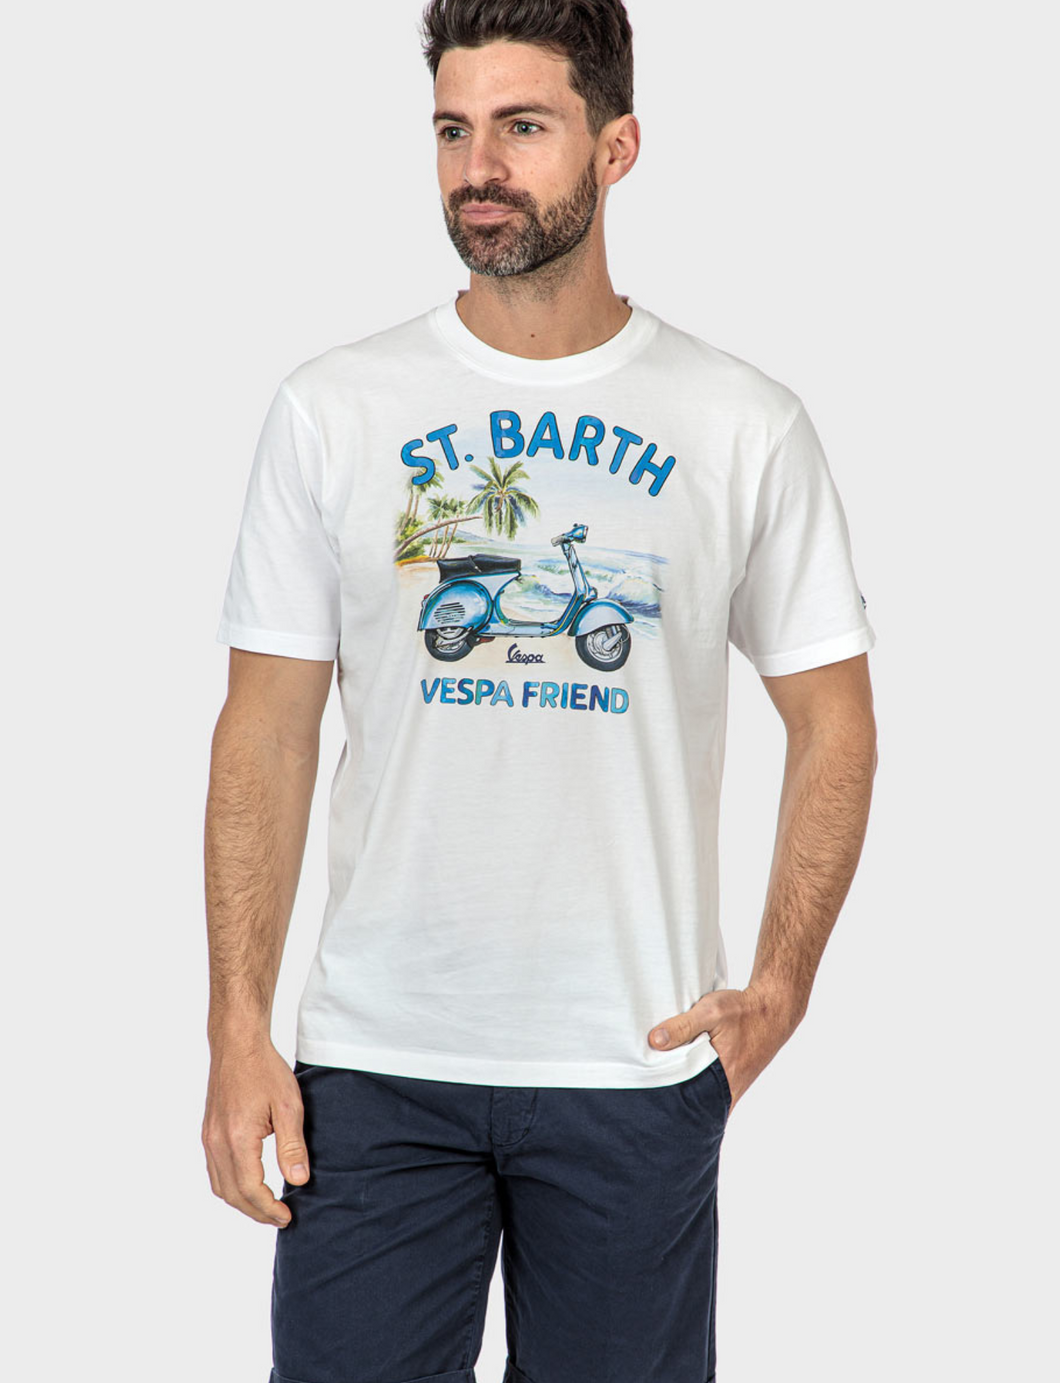 Camiseta Saint Barth “vespa friend”